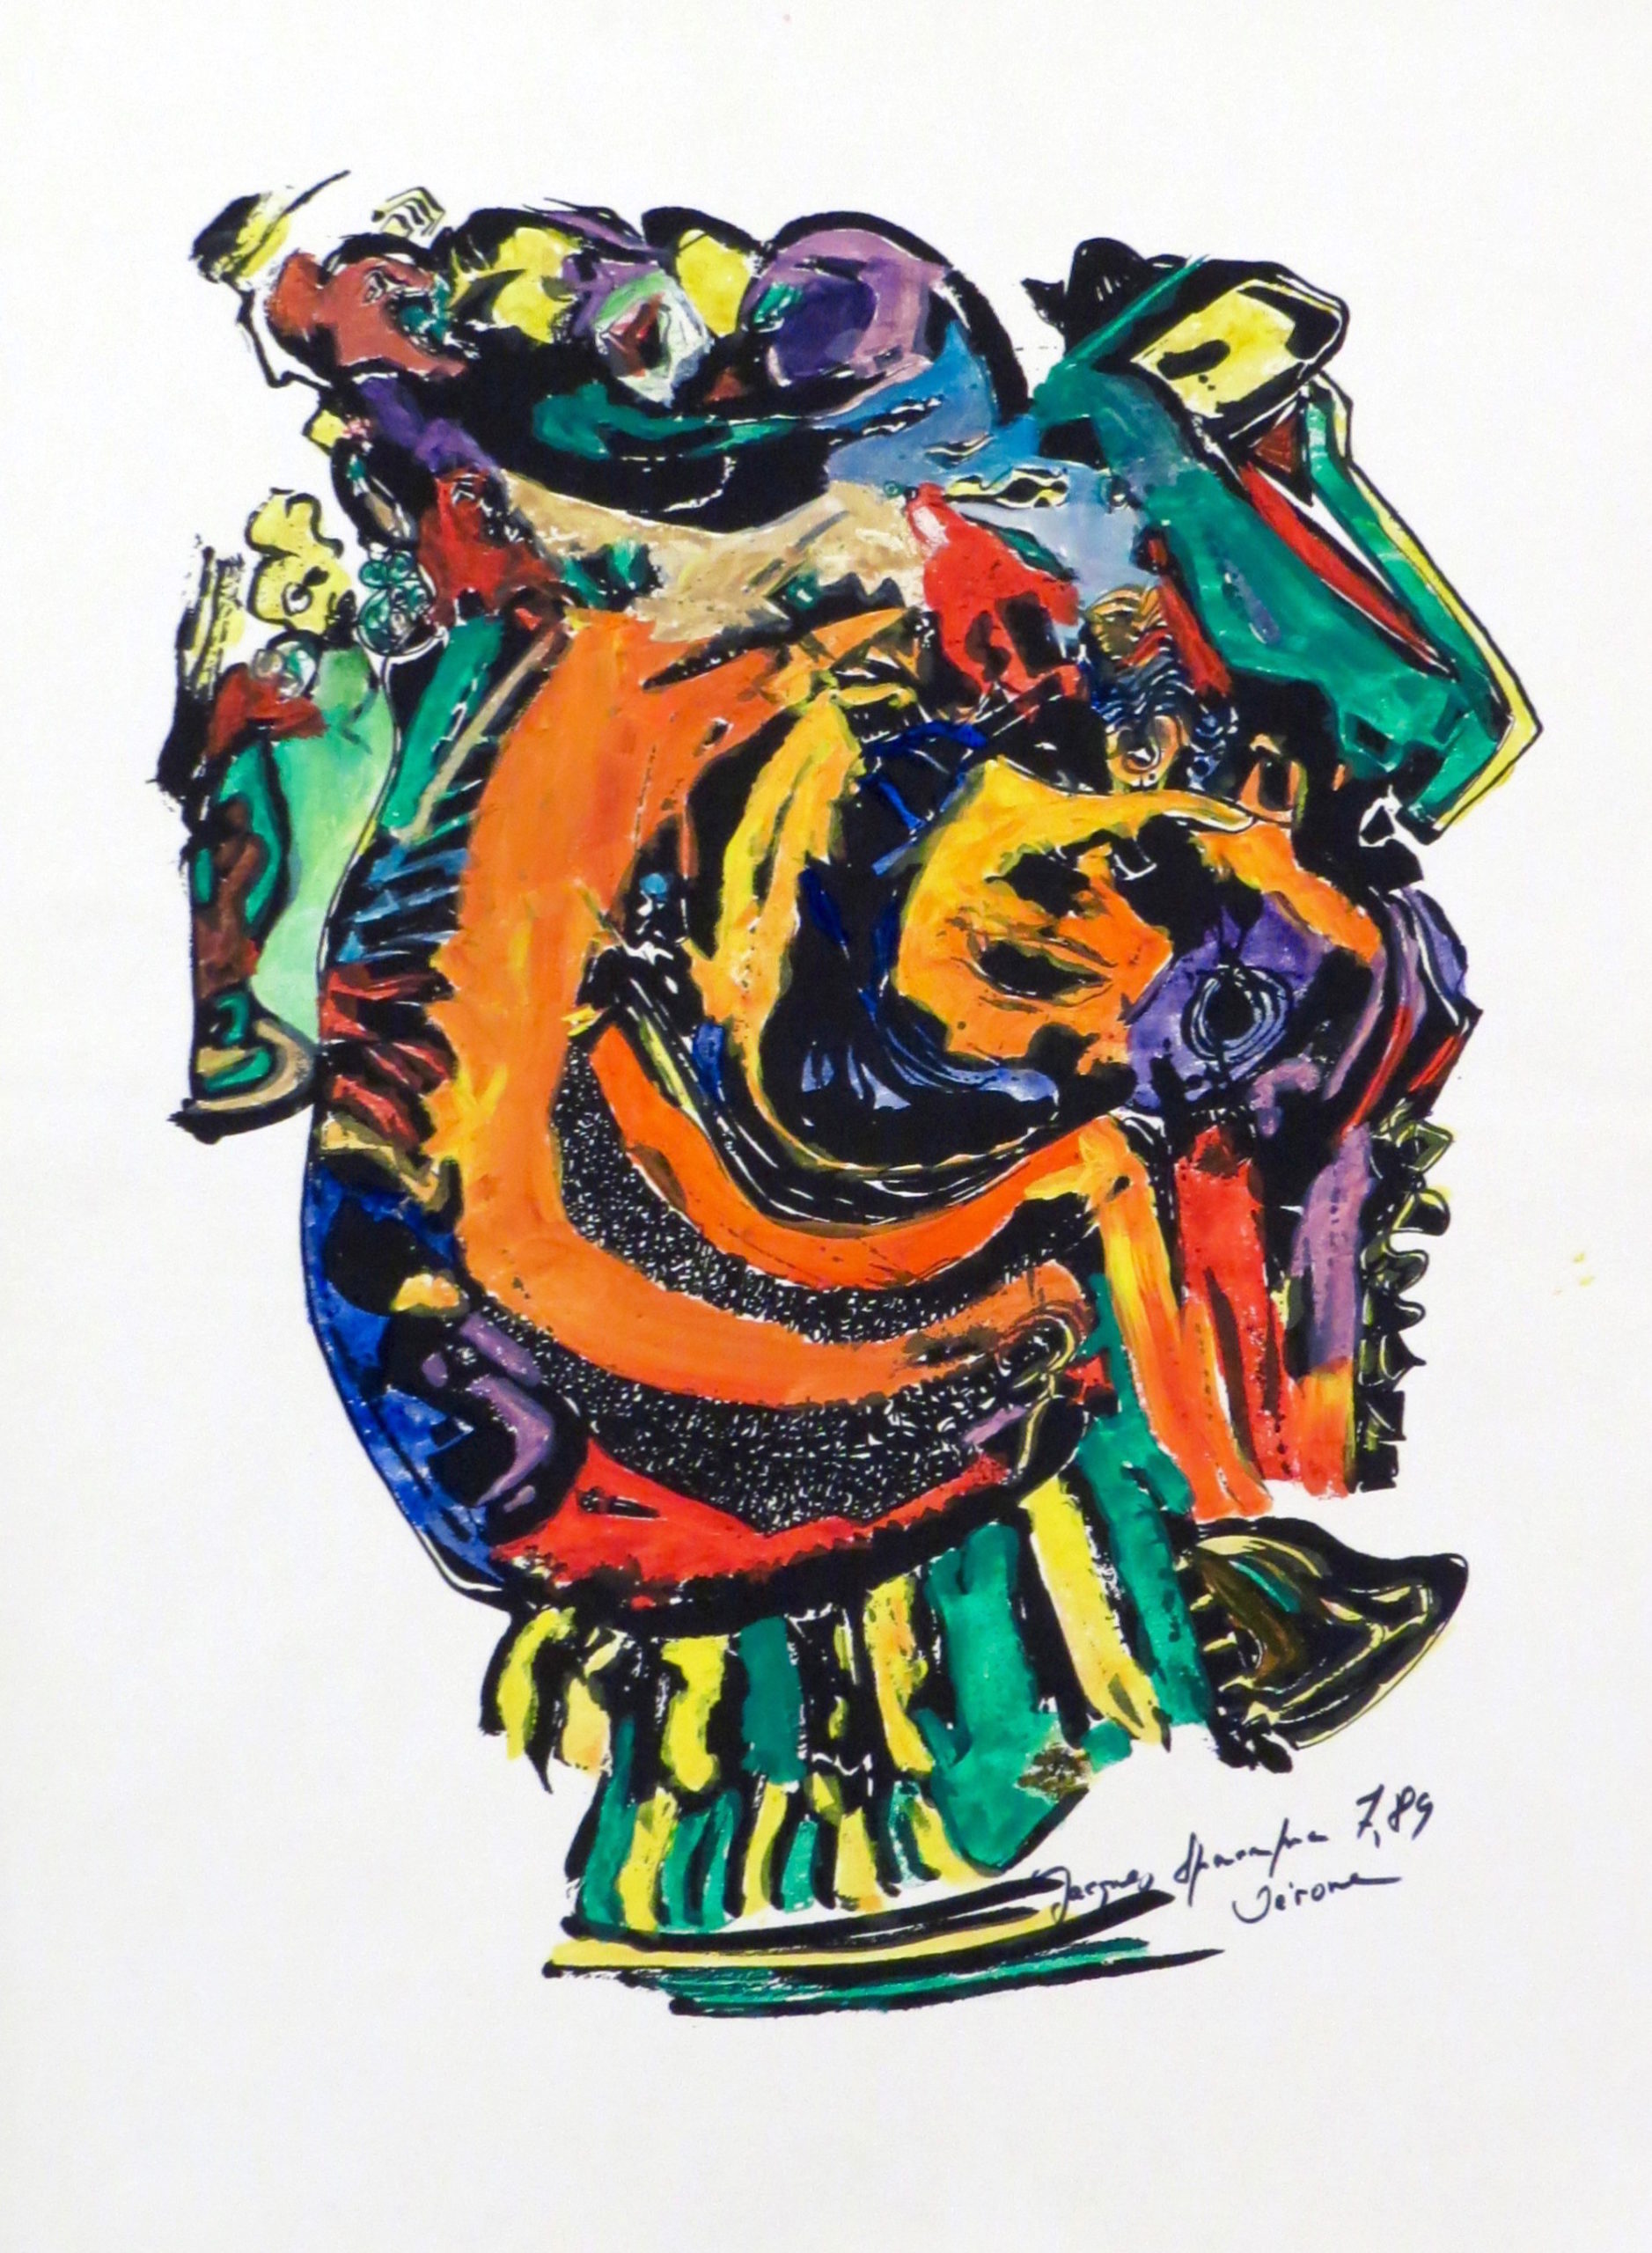 Jacques Spacagna Senza titolo, 1989, 61 x 45 cm